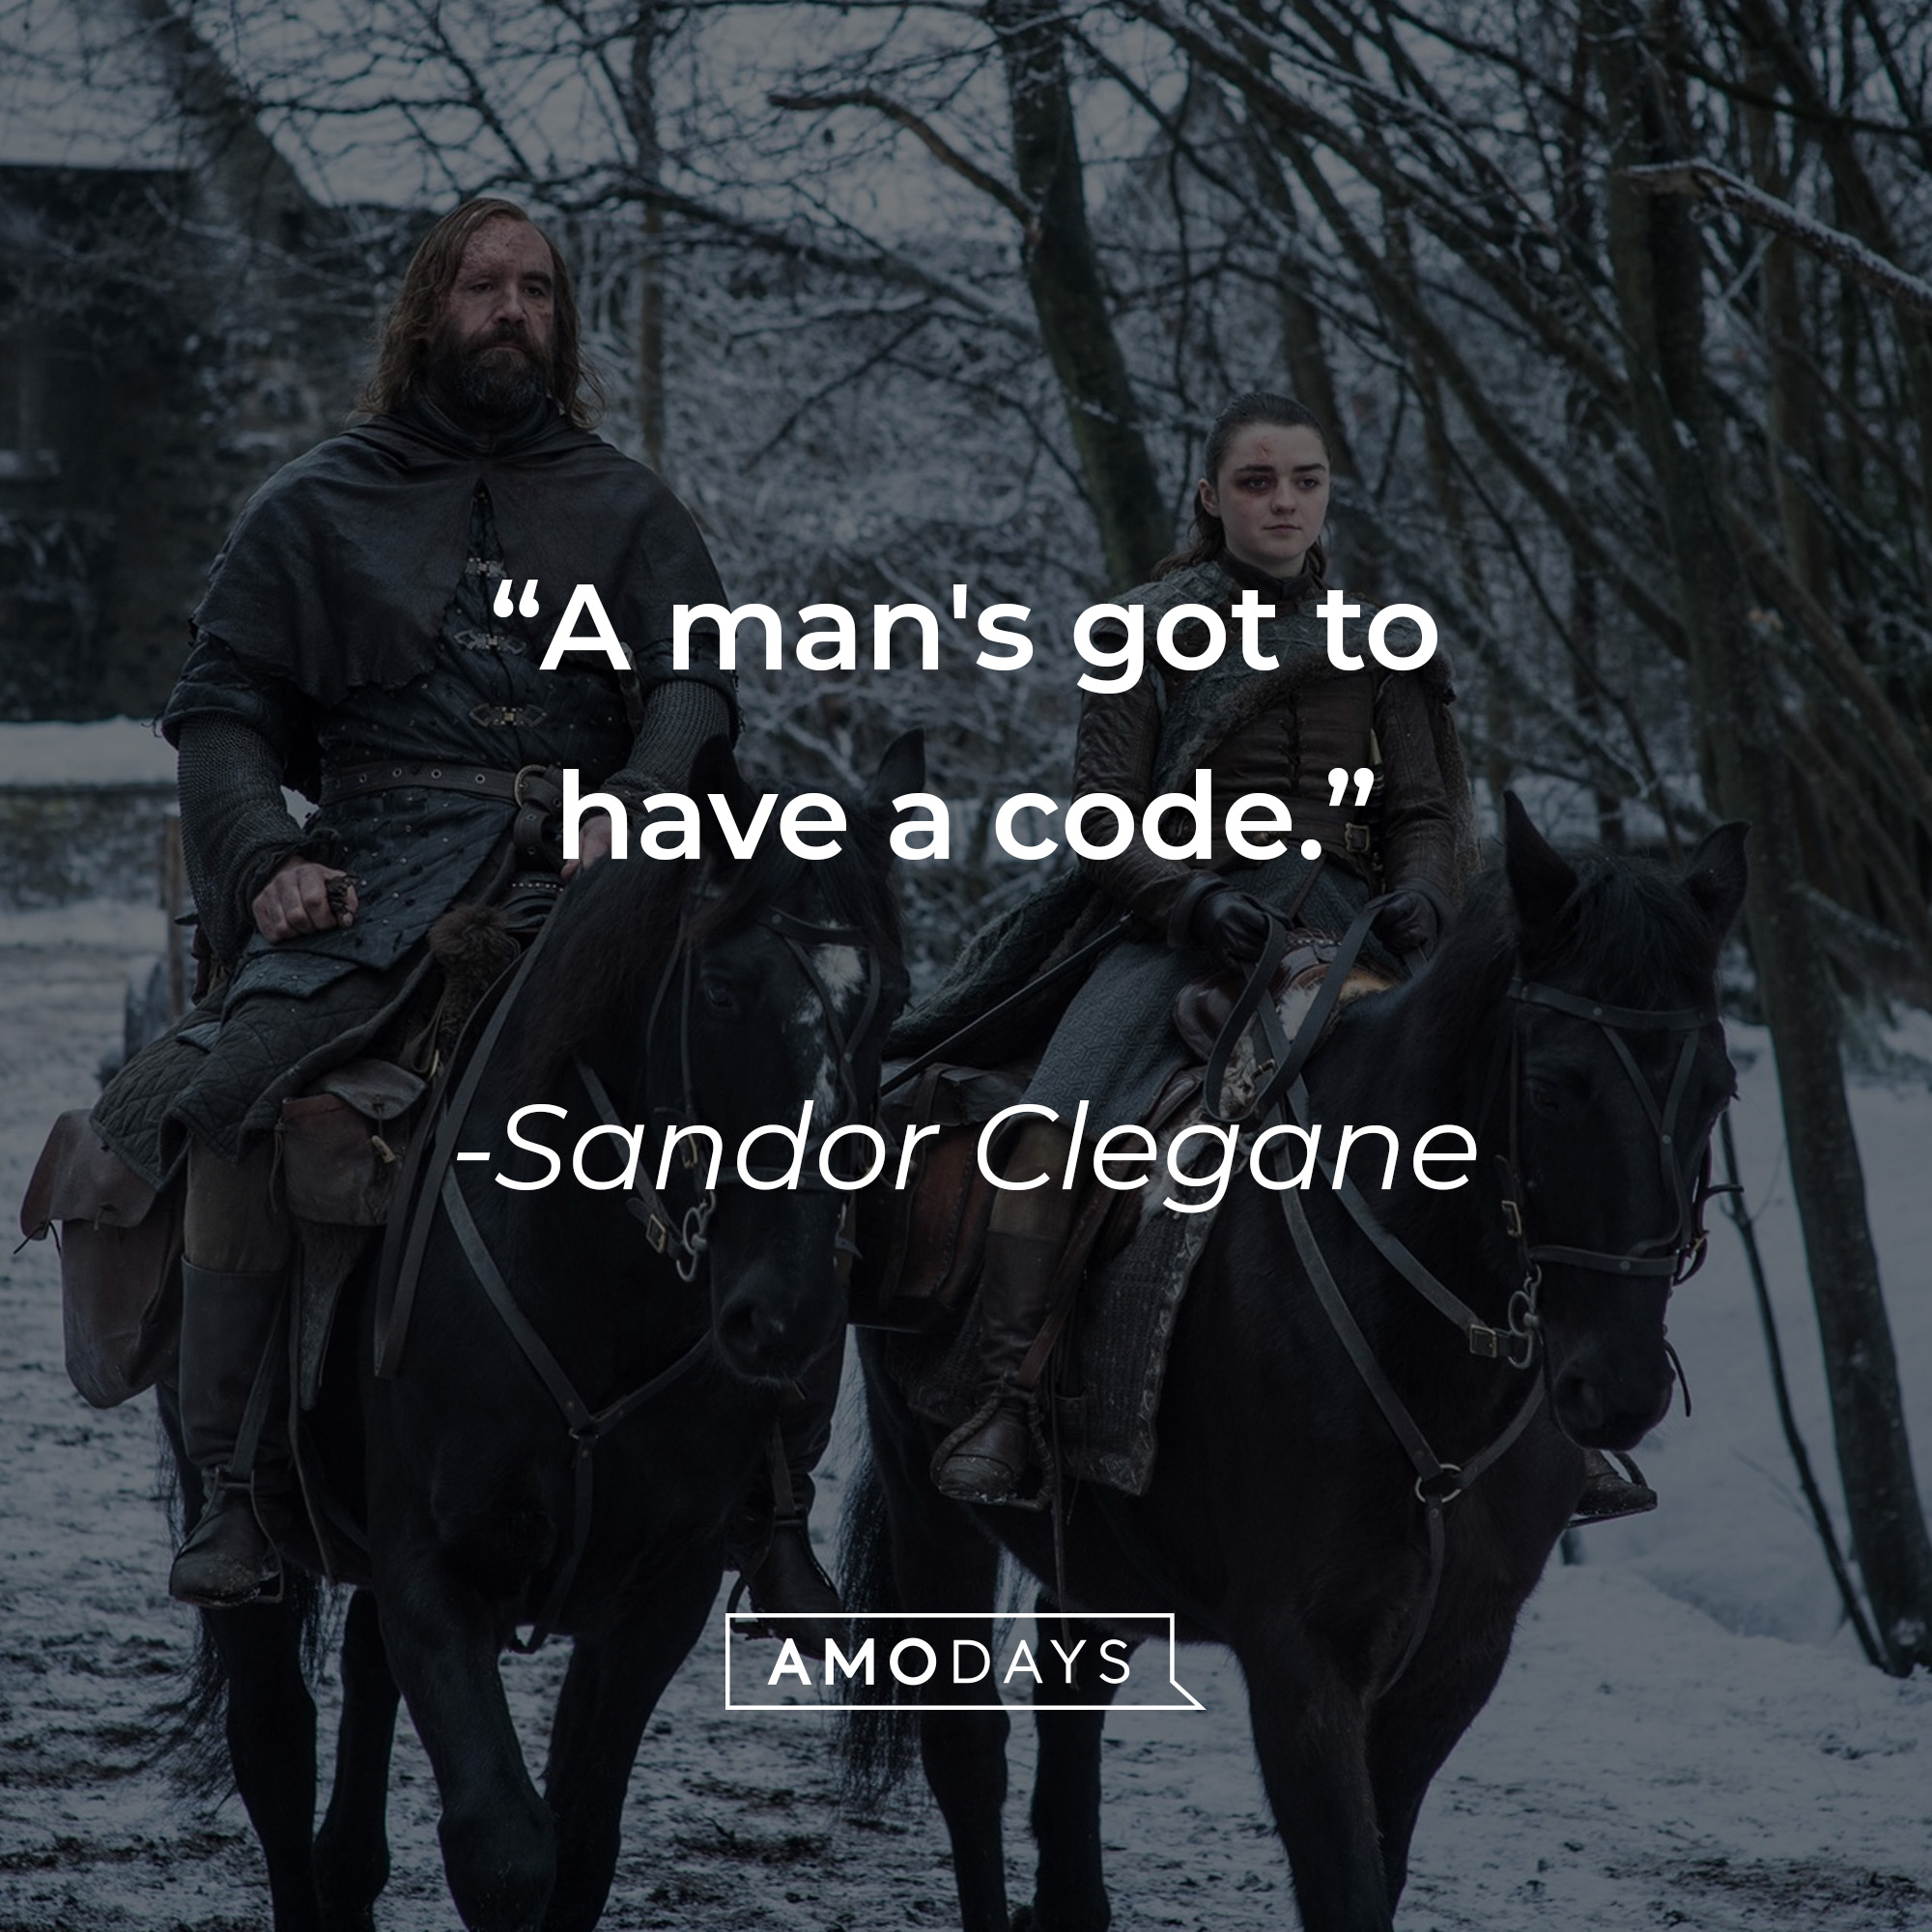 Sandor Clegane's quote: "A man's got to have a code." | Source: facebook.com/GameOfThrones